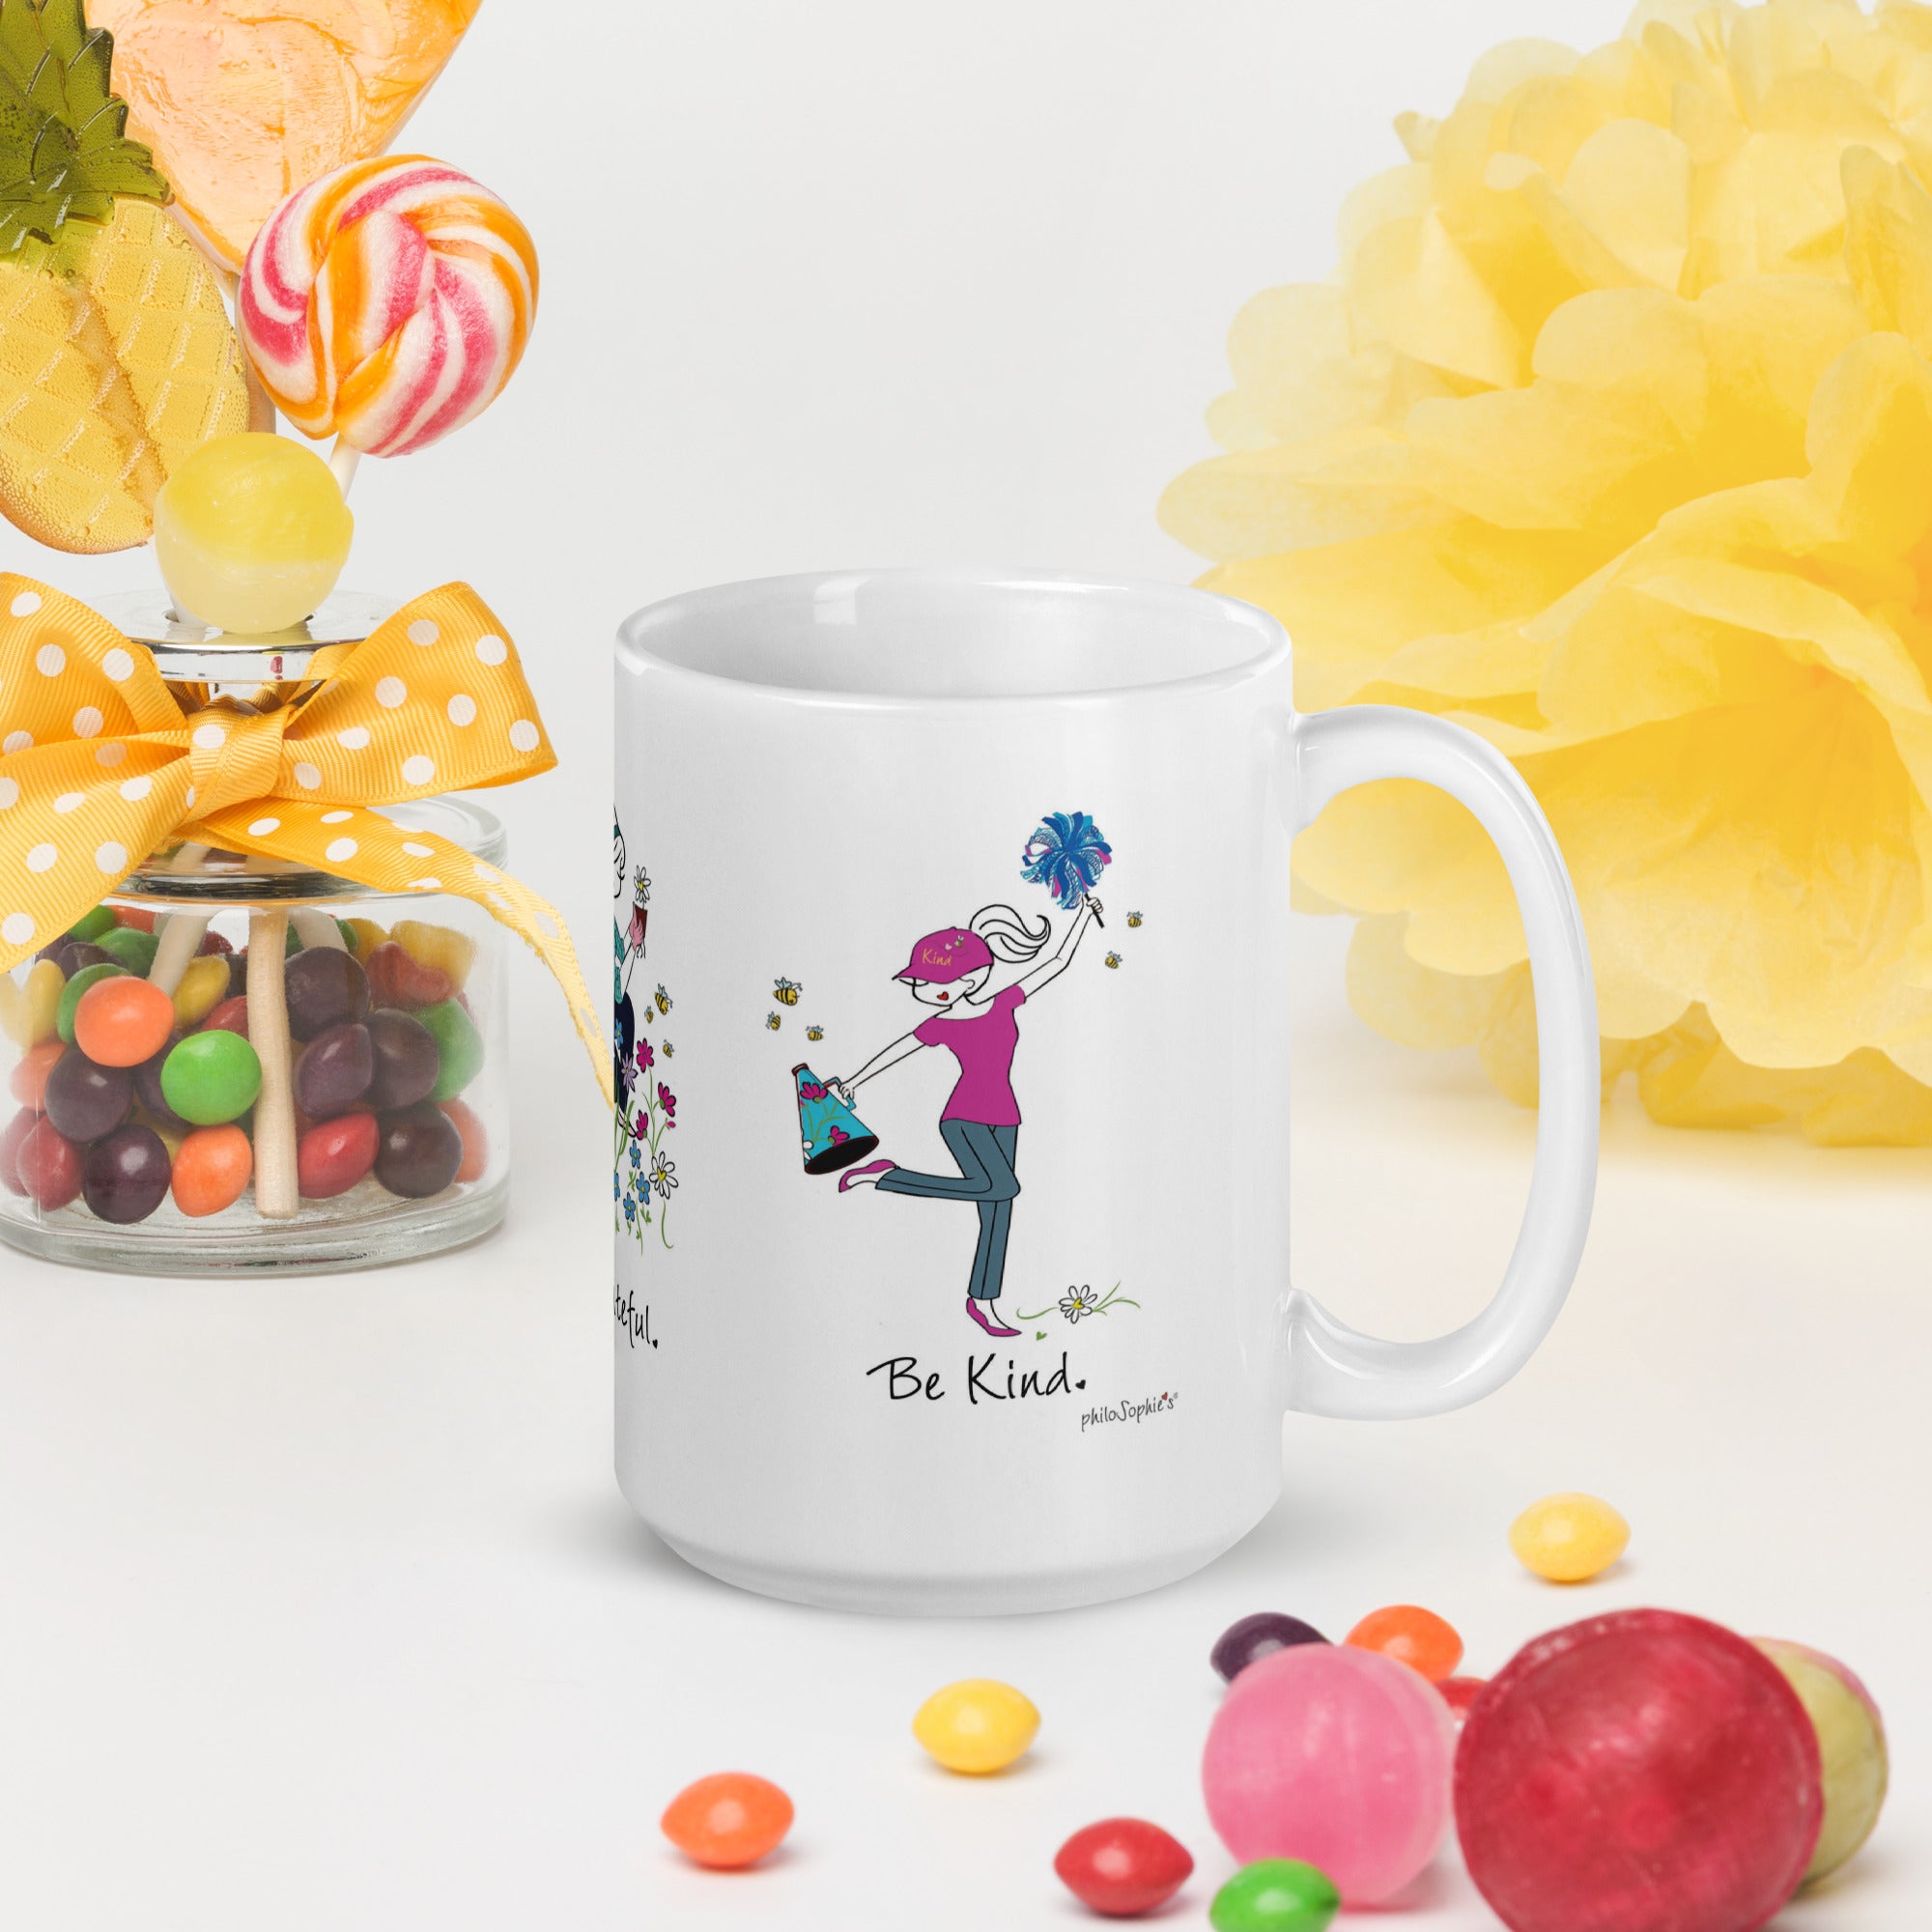 Inspirational Ceramic Mug - Happiness